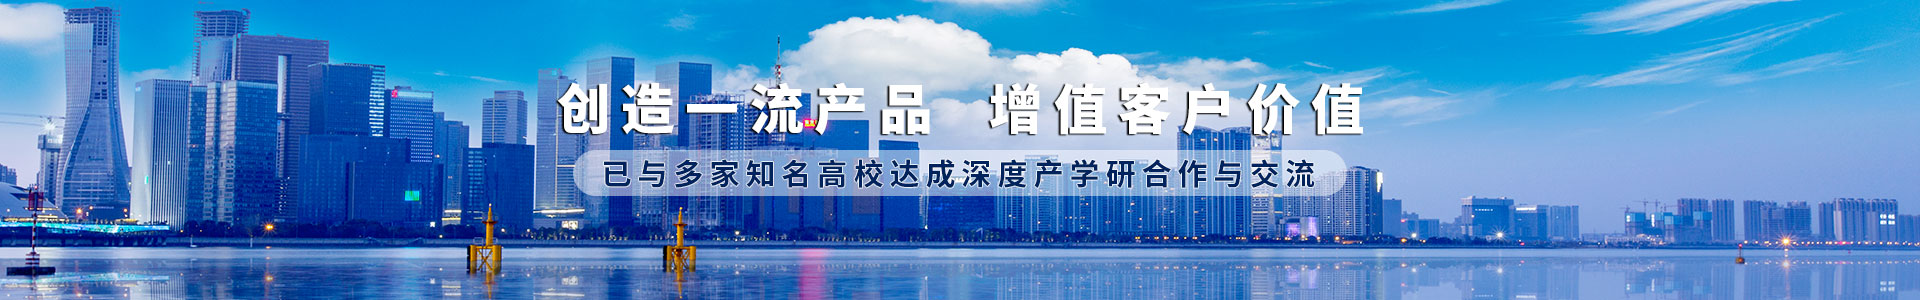 BB电子·(china)官方网站_image307